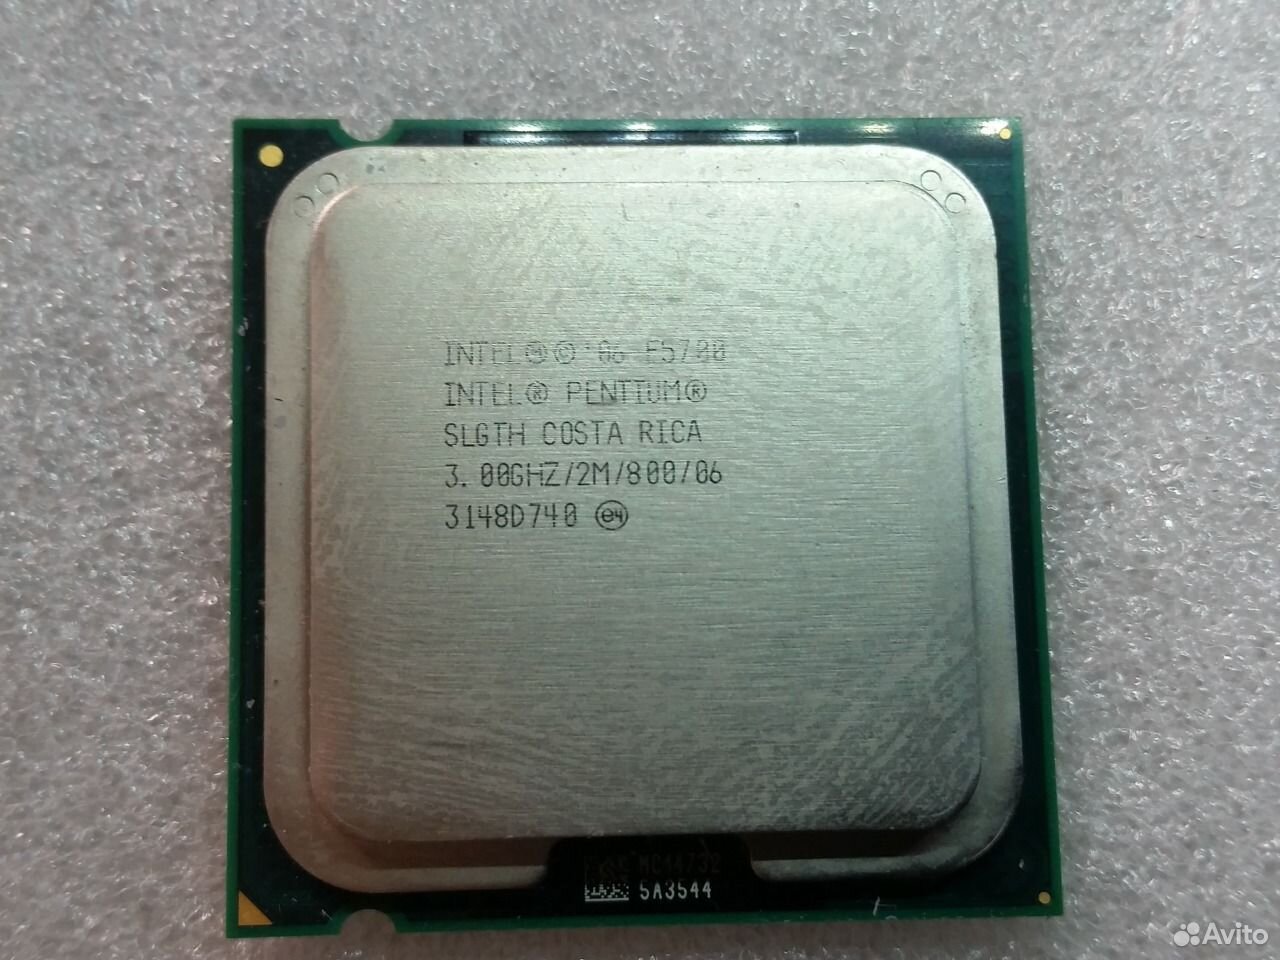 Intel Pentium e5700. Intel Pentium e5700 3.00GHZ. Intel Pentium e2200 Conroe lga775, 2 x 2200 МГЦ. Intel Core 2 Duo e6550 Conroe lga775, 2 x 2333 МГЦ. Pentium r 3.00 ghz